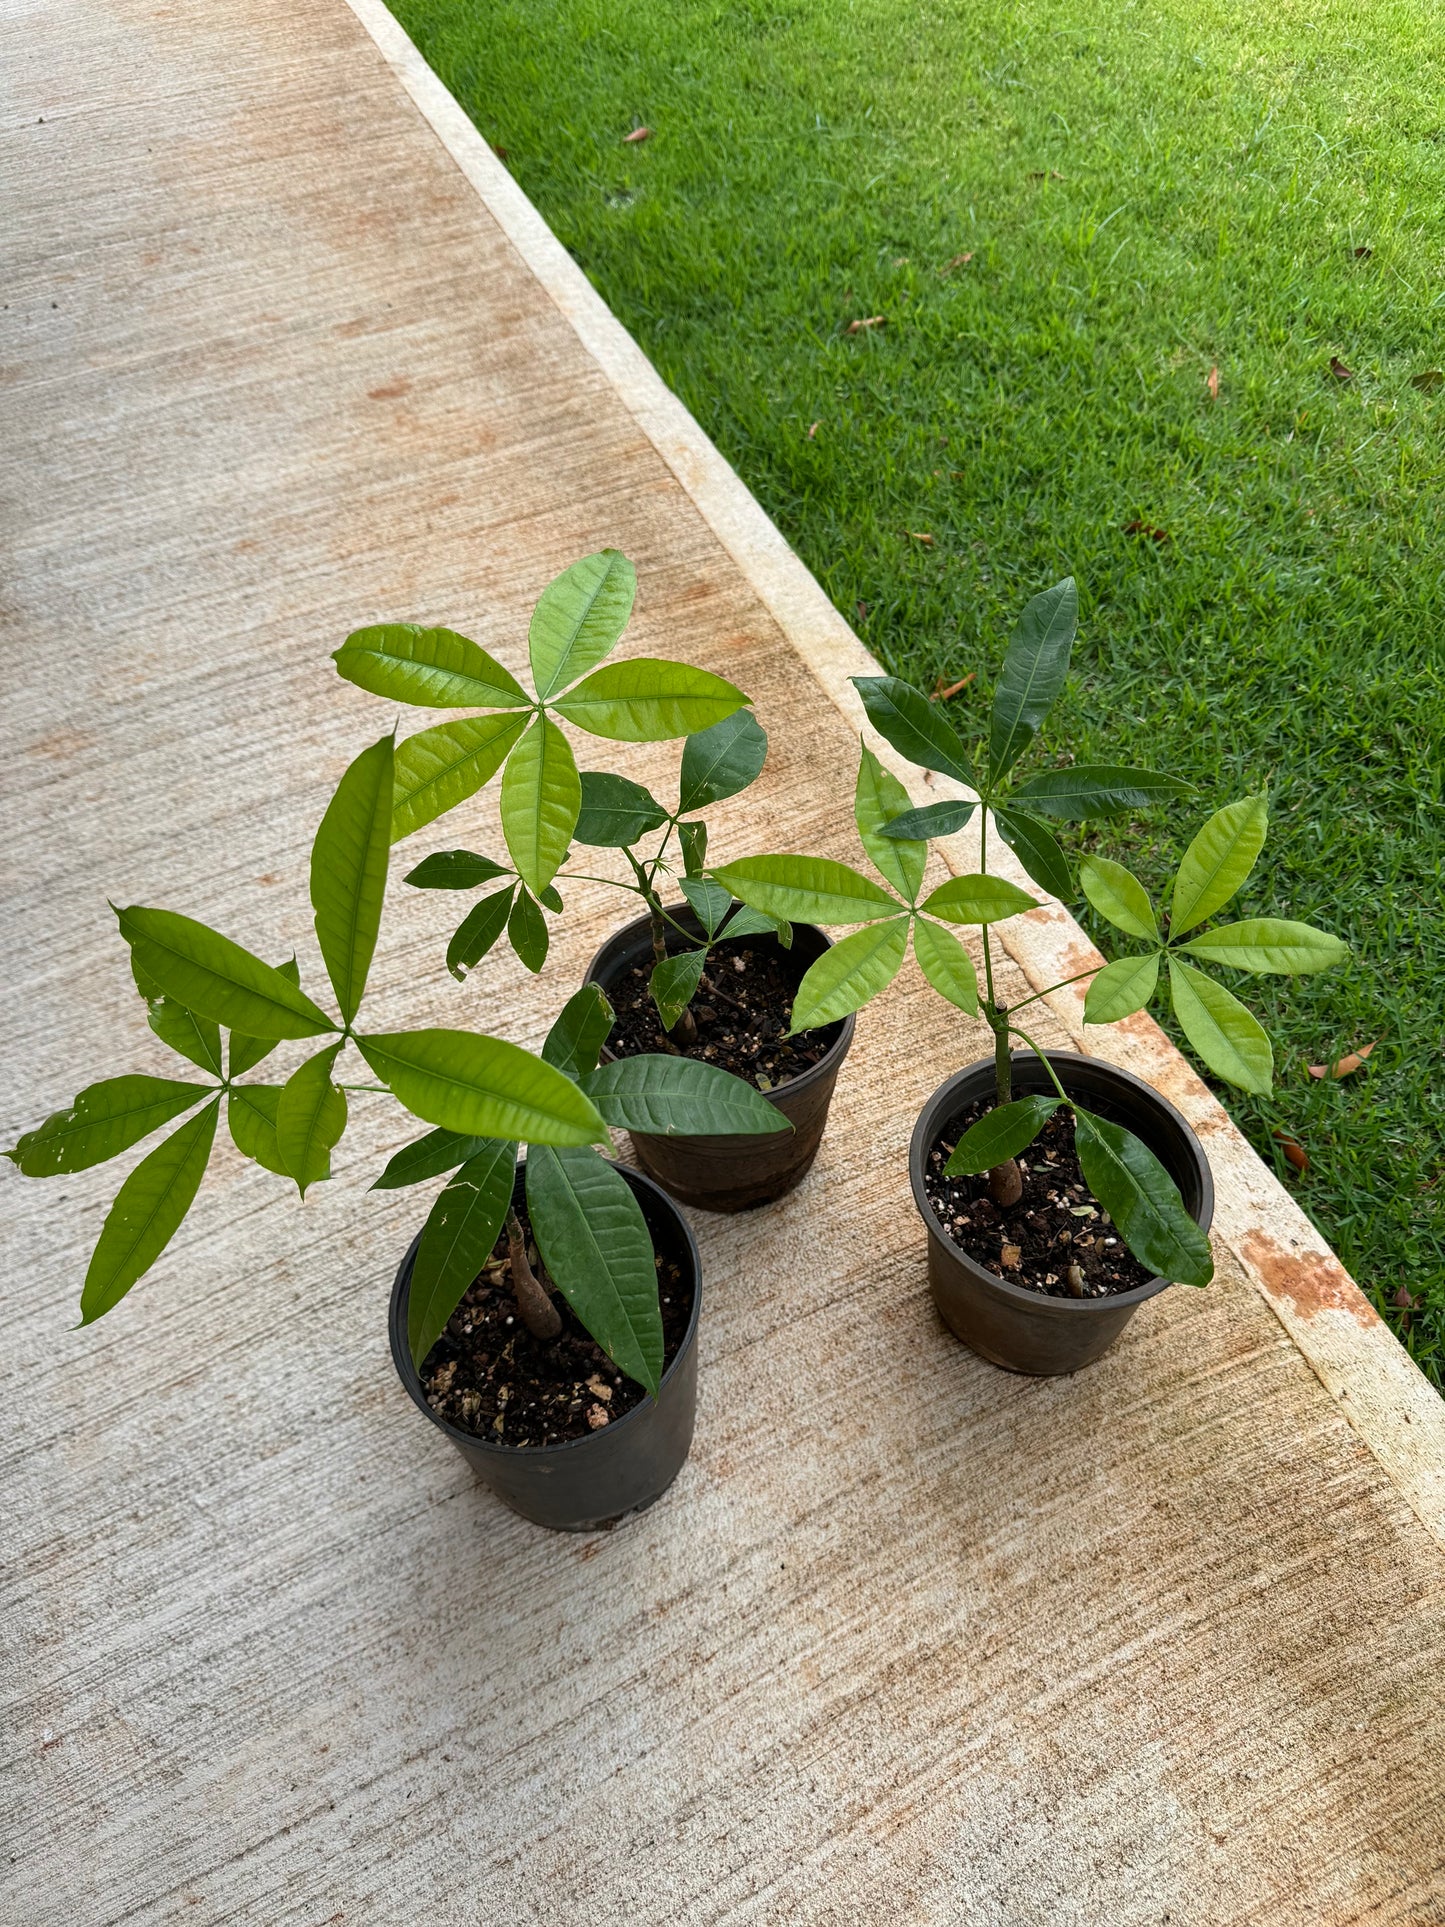 Money Tree 'Guiana Chestnut' Pachira 1 Gallon Single Stem